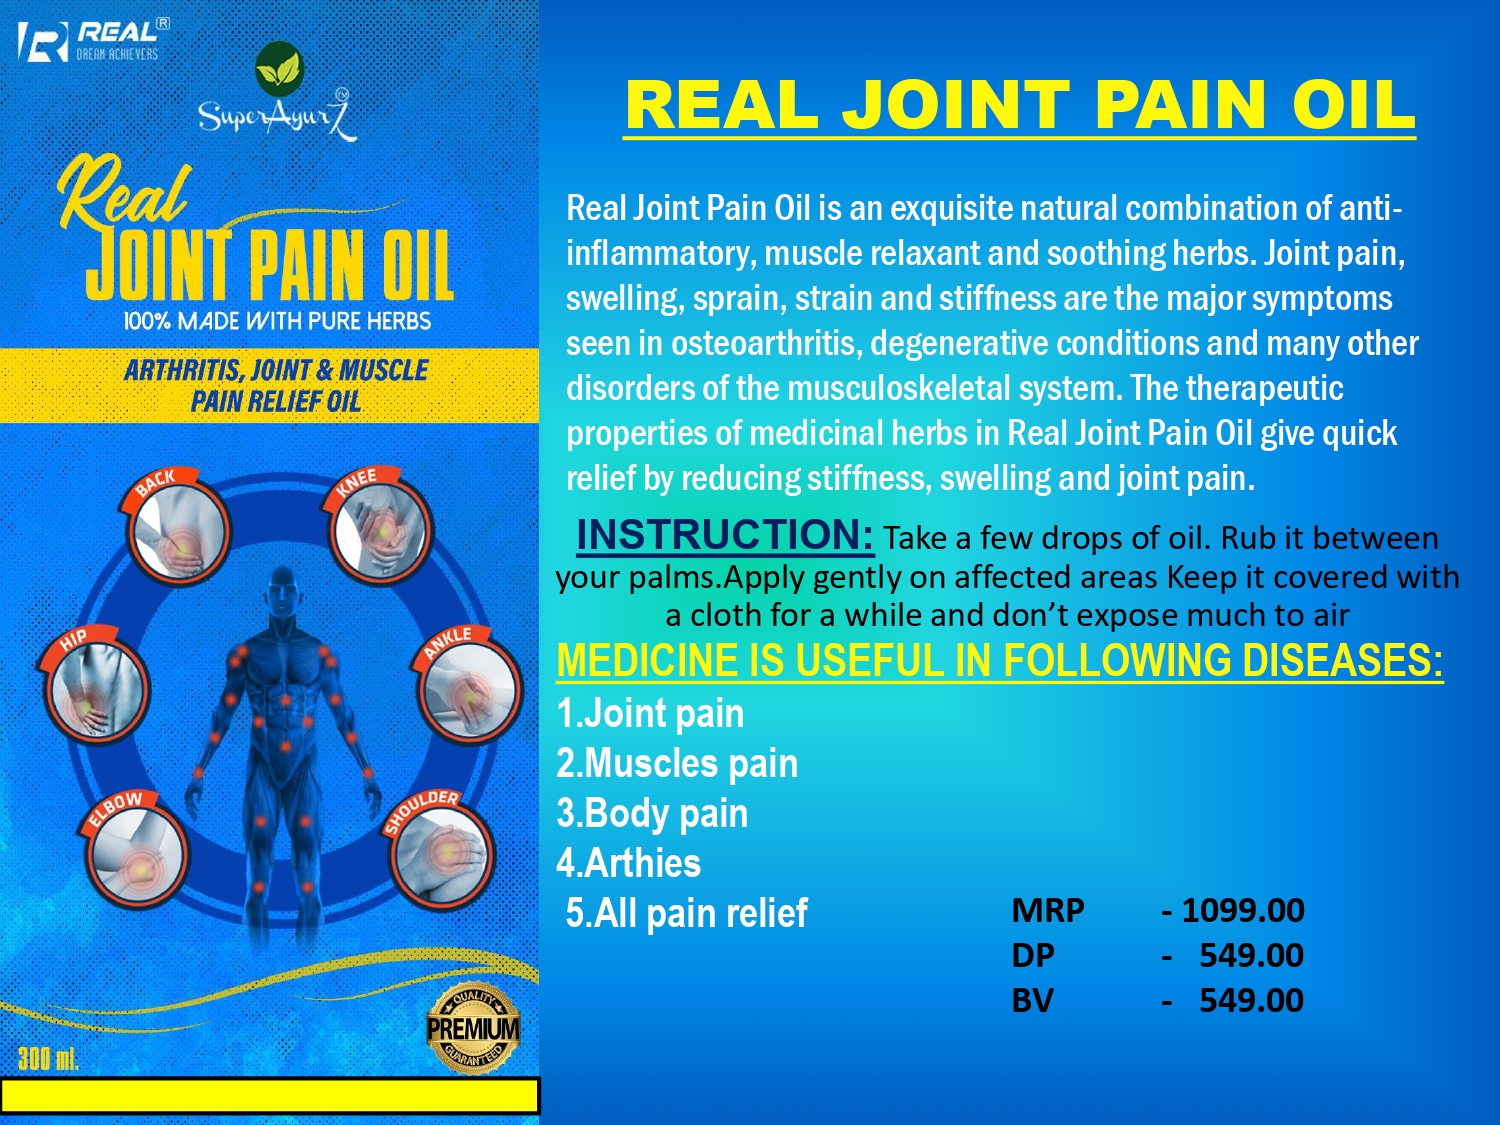 SUPER AYURZ PREMIUM REAL JOINT PAIN OIL